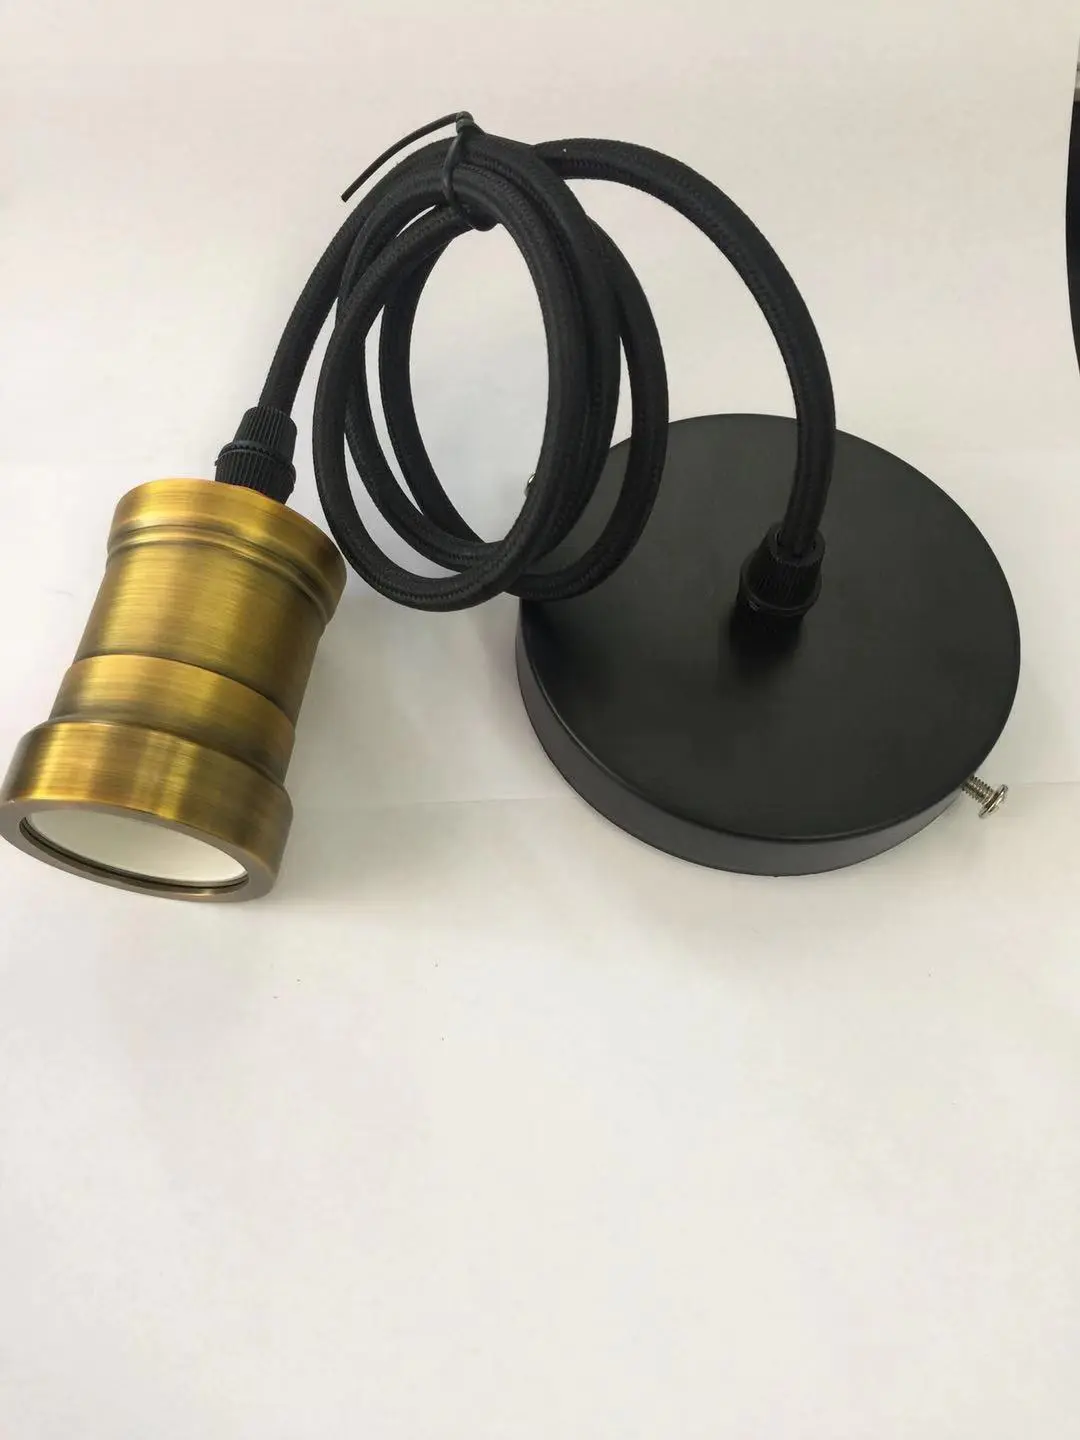 OEM 1m cablewith Retro Vintage E27 E26 Pendant Lamp Holder Hanging Ceiling Light Bulb Socket